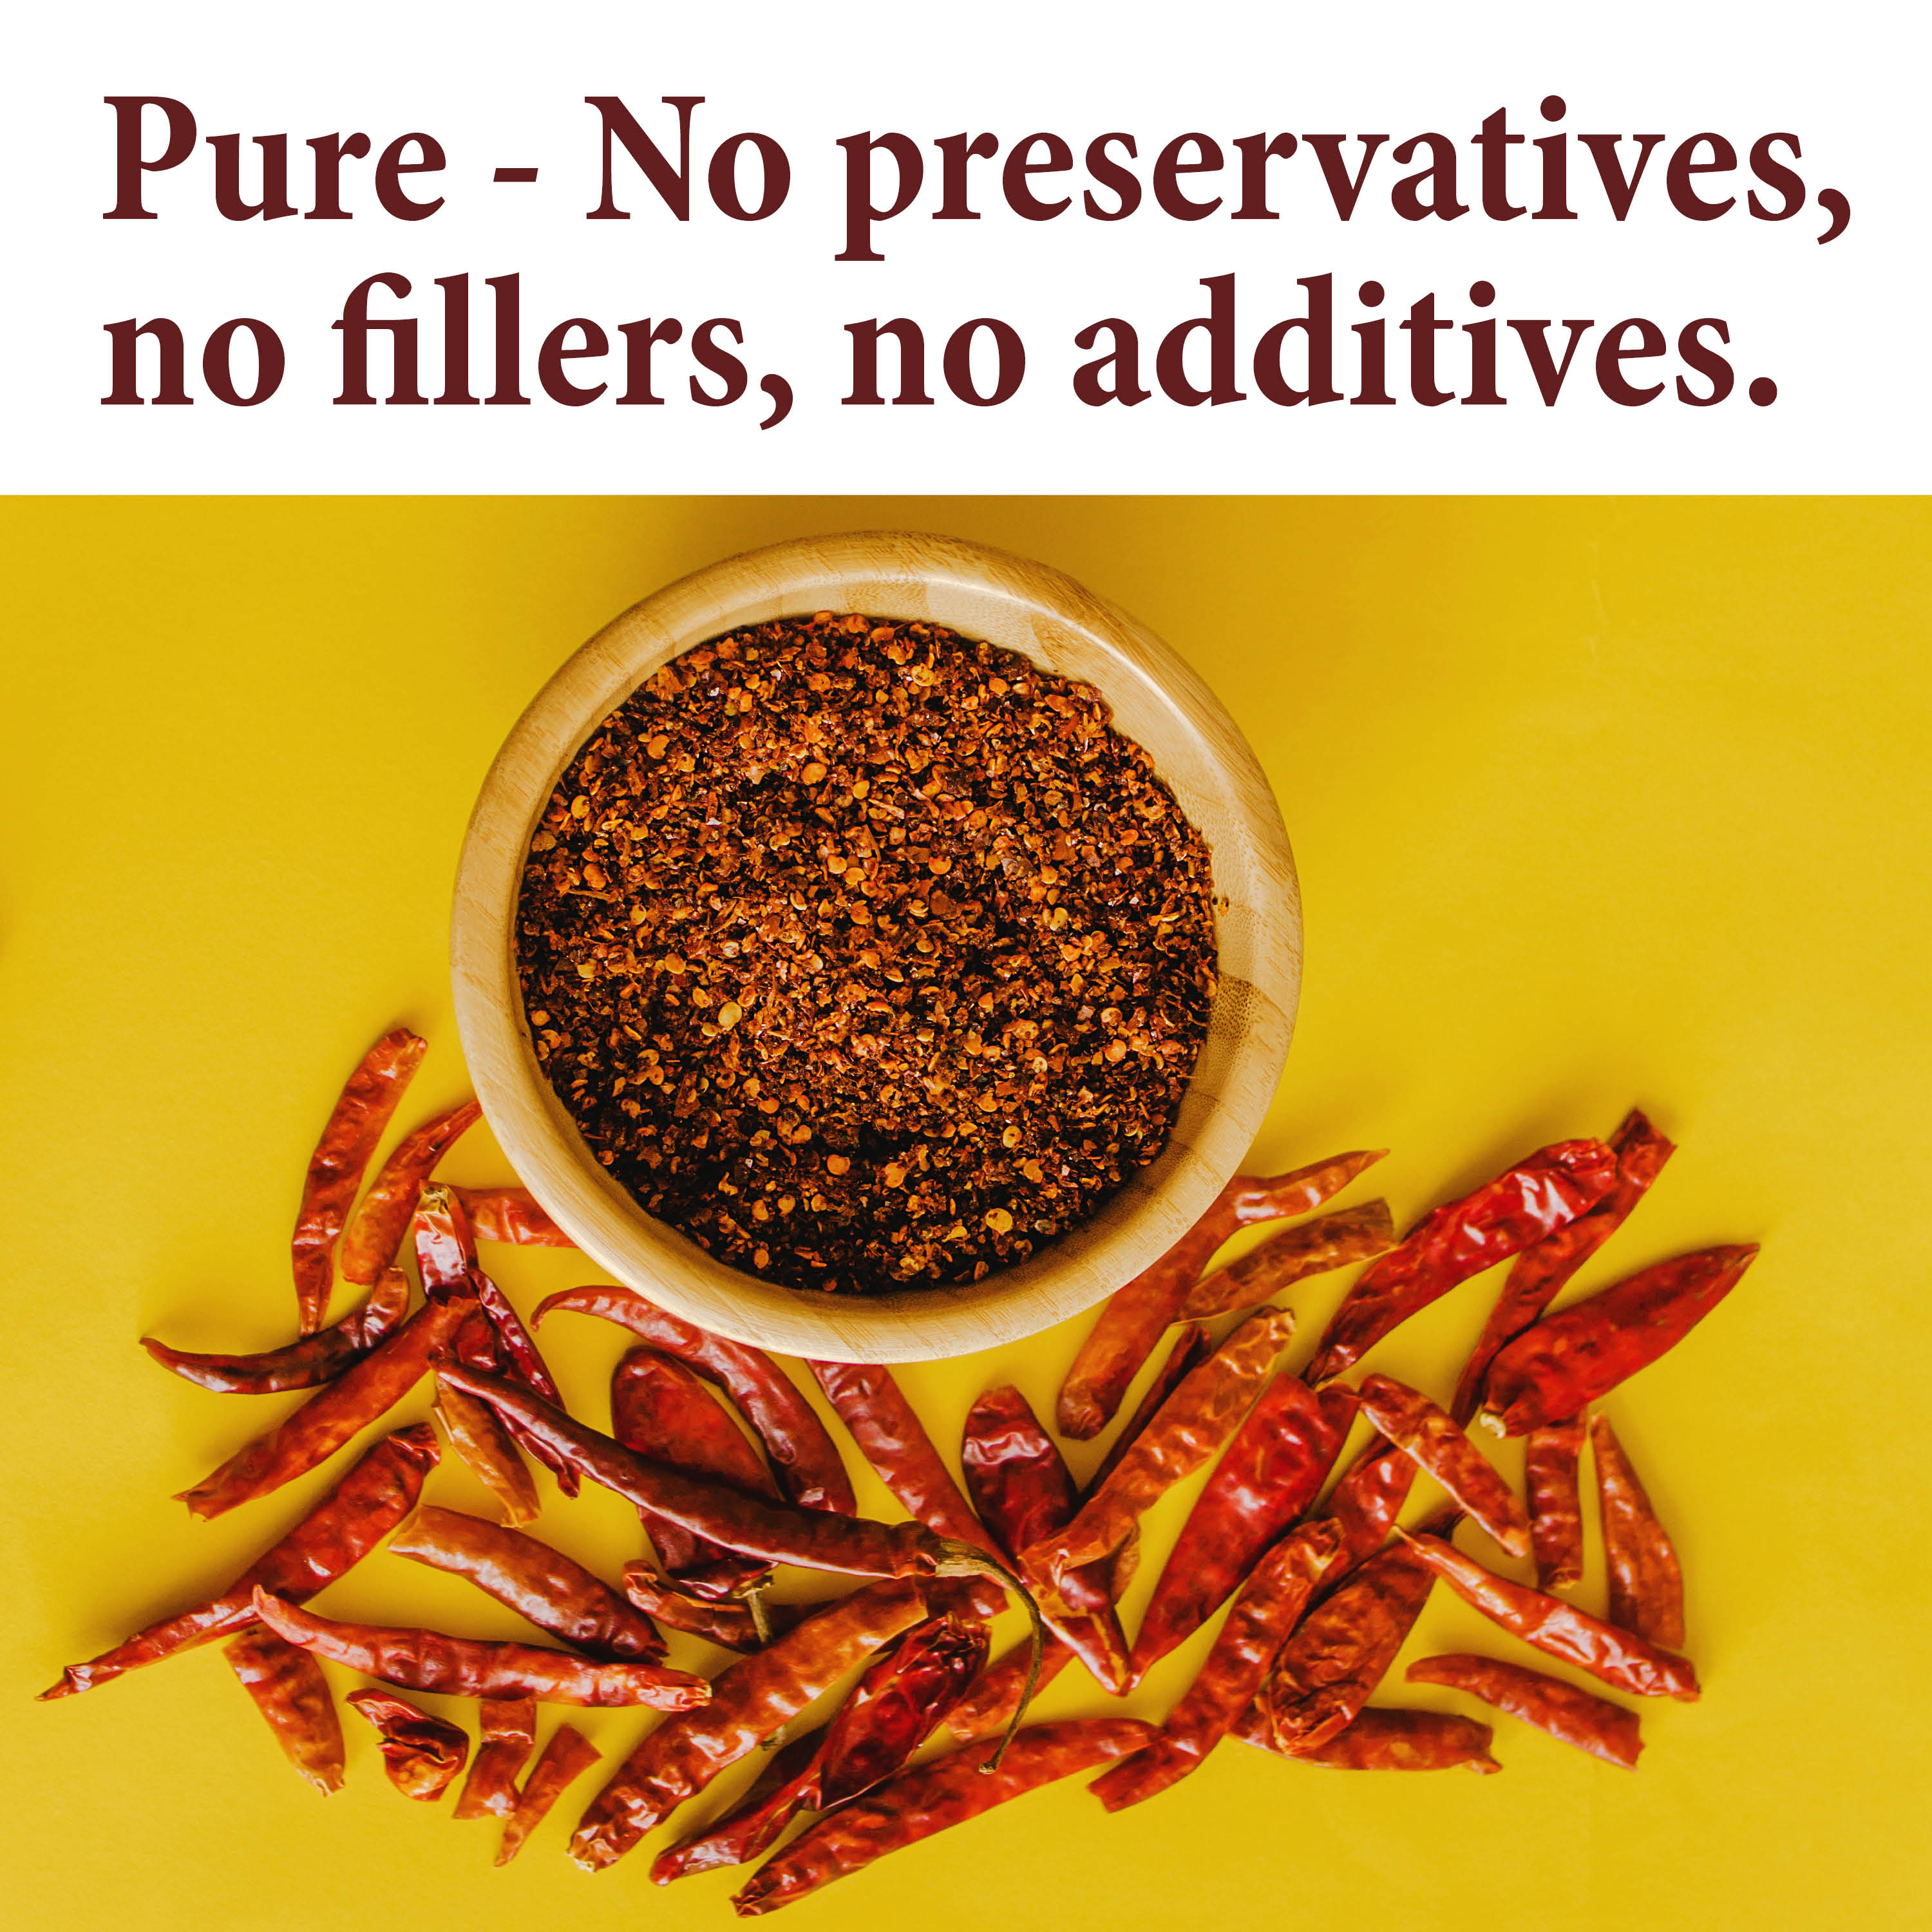 Spices Village Gumbo File [ 4 oz ] - Gumbo File Seasoning, Ground Sassafras Tree Leaves, Filé Powder - Kosher, Gluten Free, Non GMO, Resealable Bulk